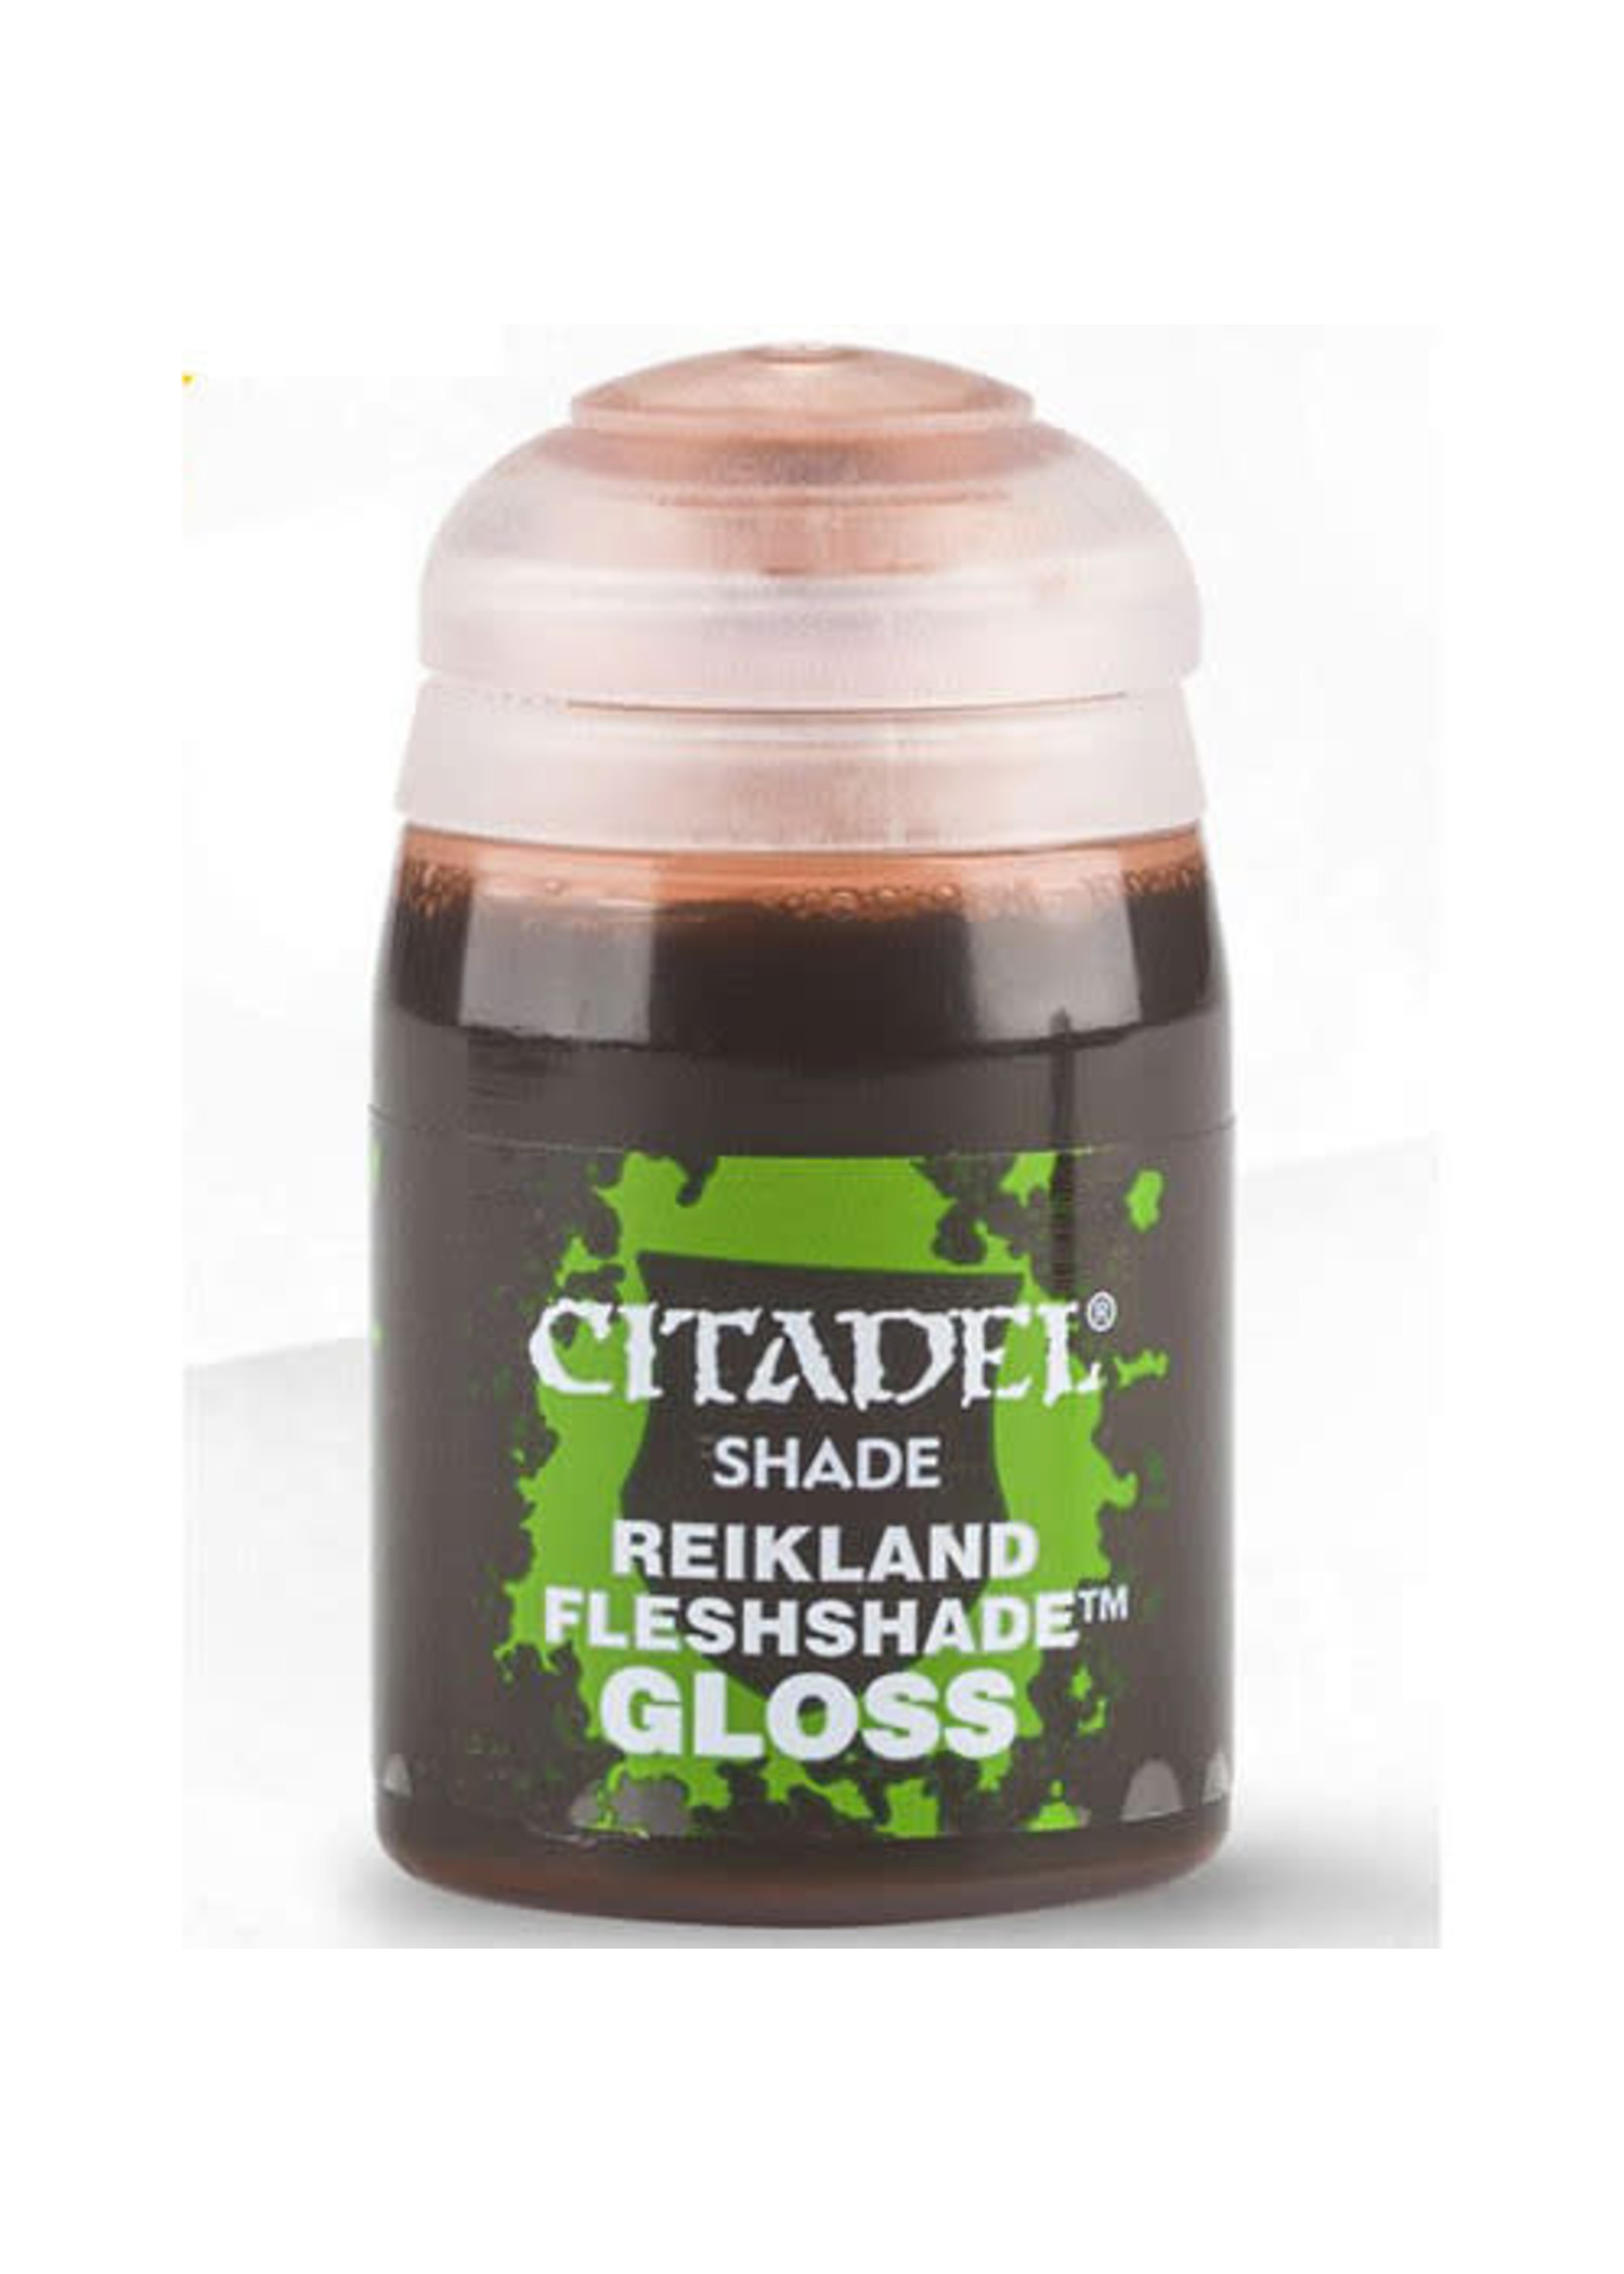 Citadel Paint Shade: Reikland Fleshshade Gloss